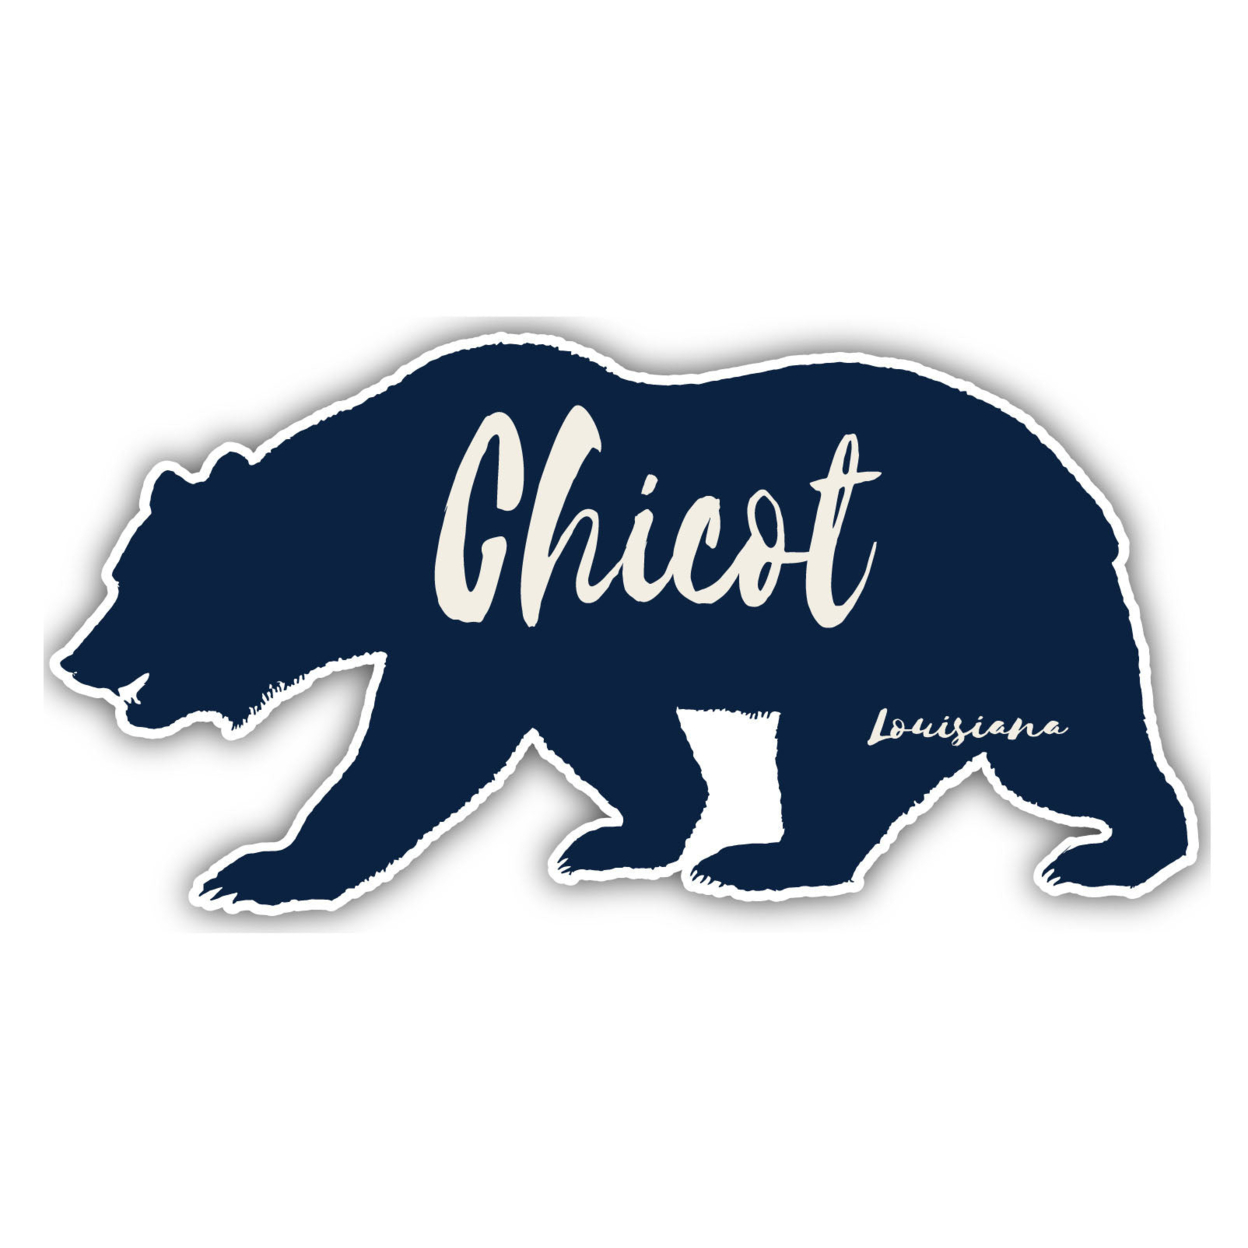 Chicot Louisiana Souvenir Decorative Stickers (Choose Theme And Size) - Single Unit, 4-Inch, Bear